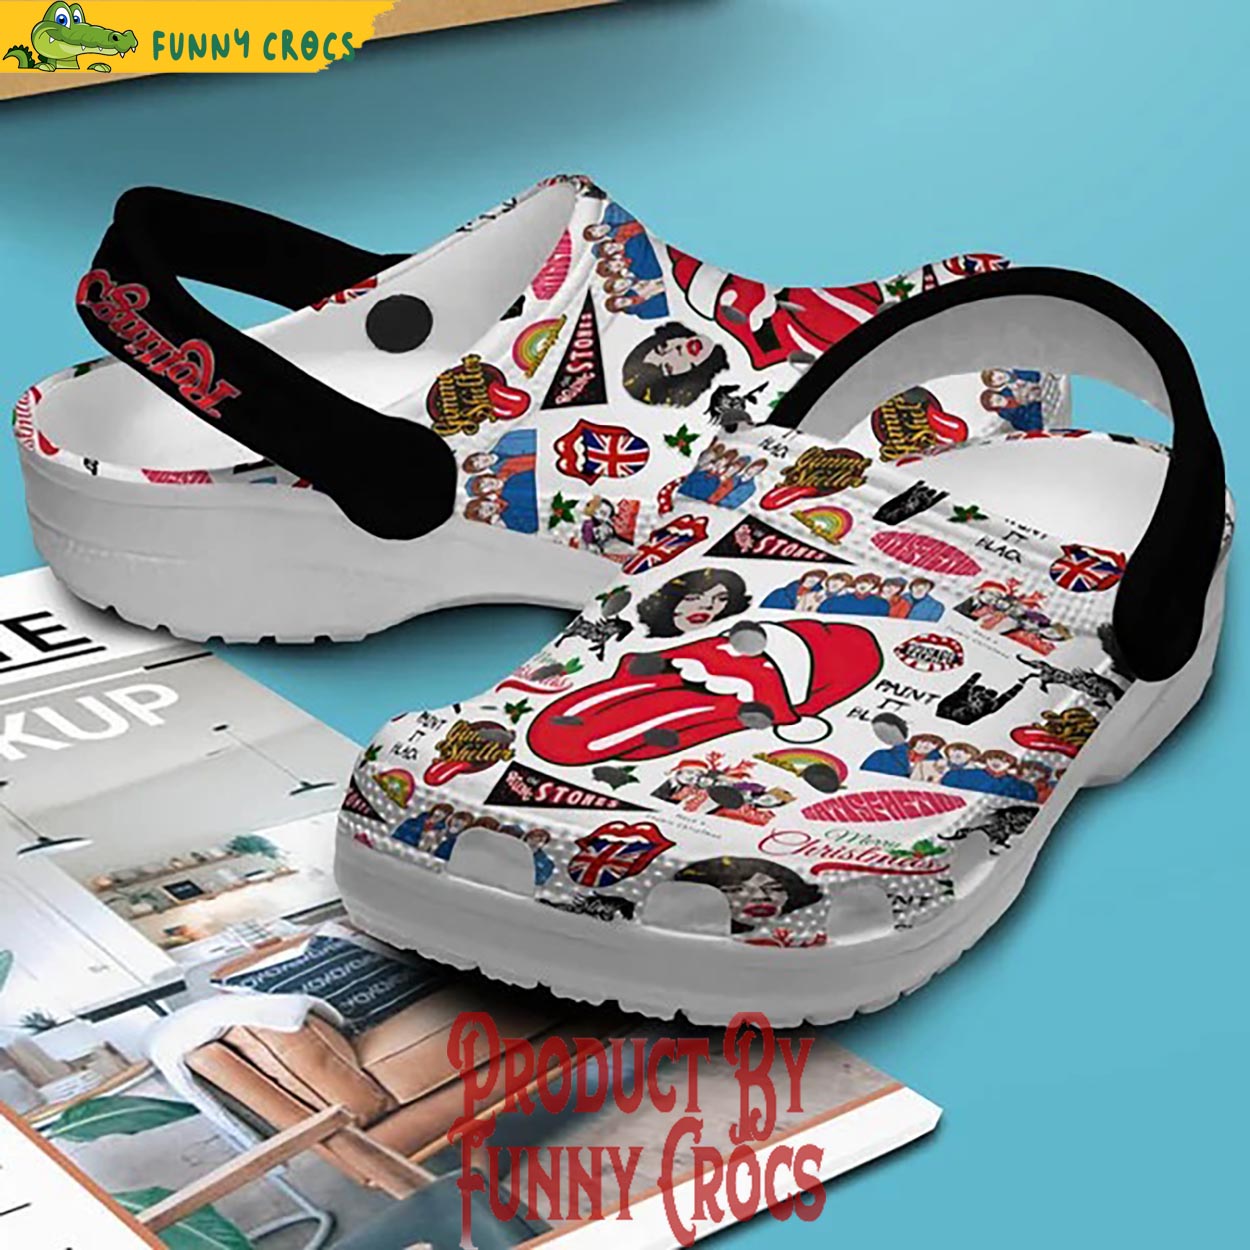 The Rolling Stones Happy Christmas Crocs